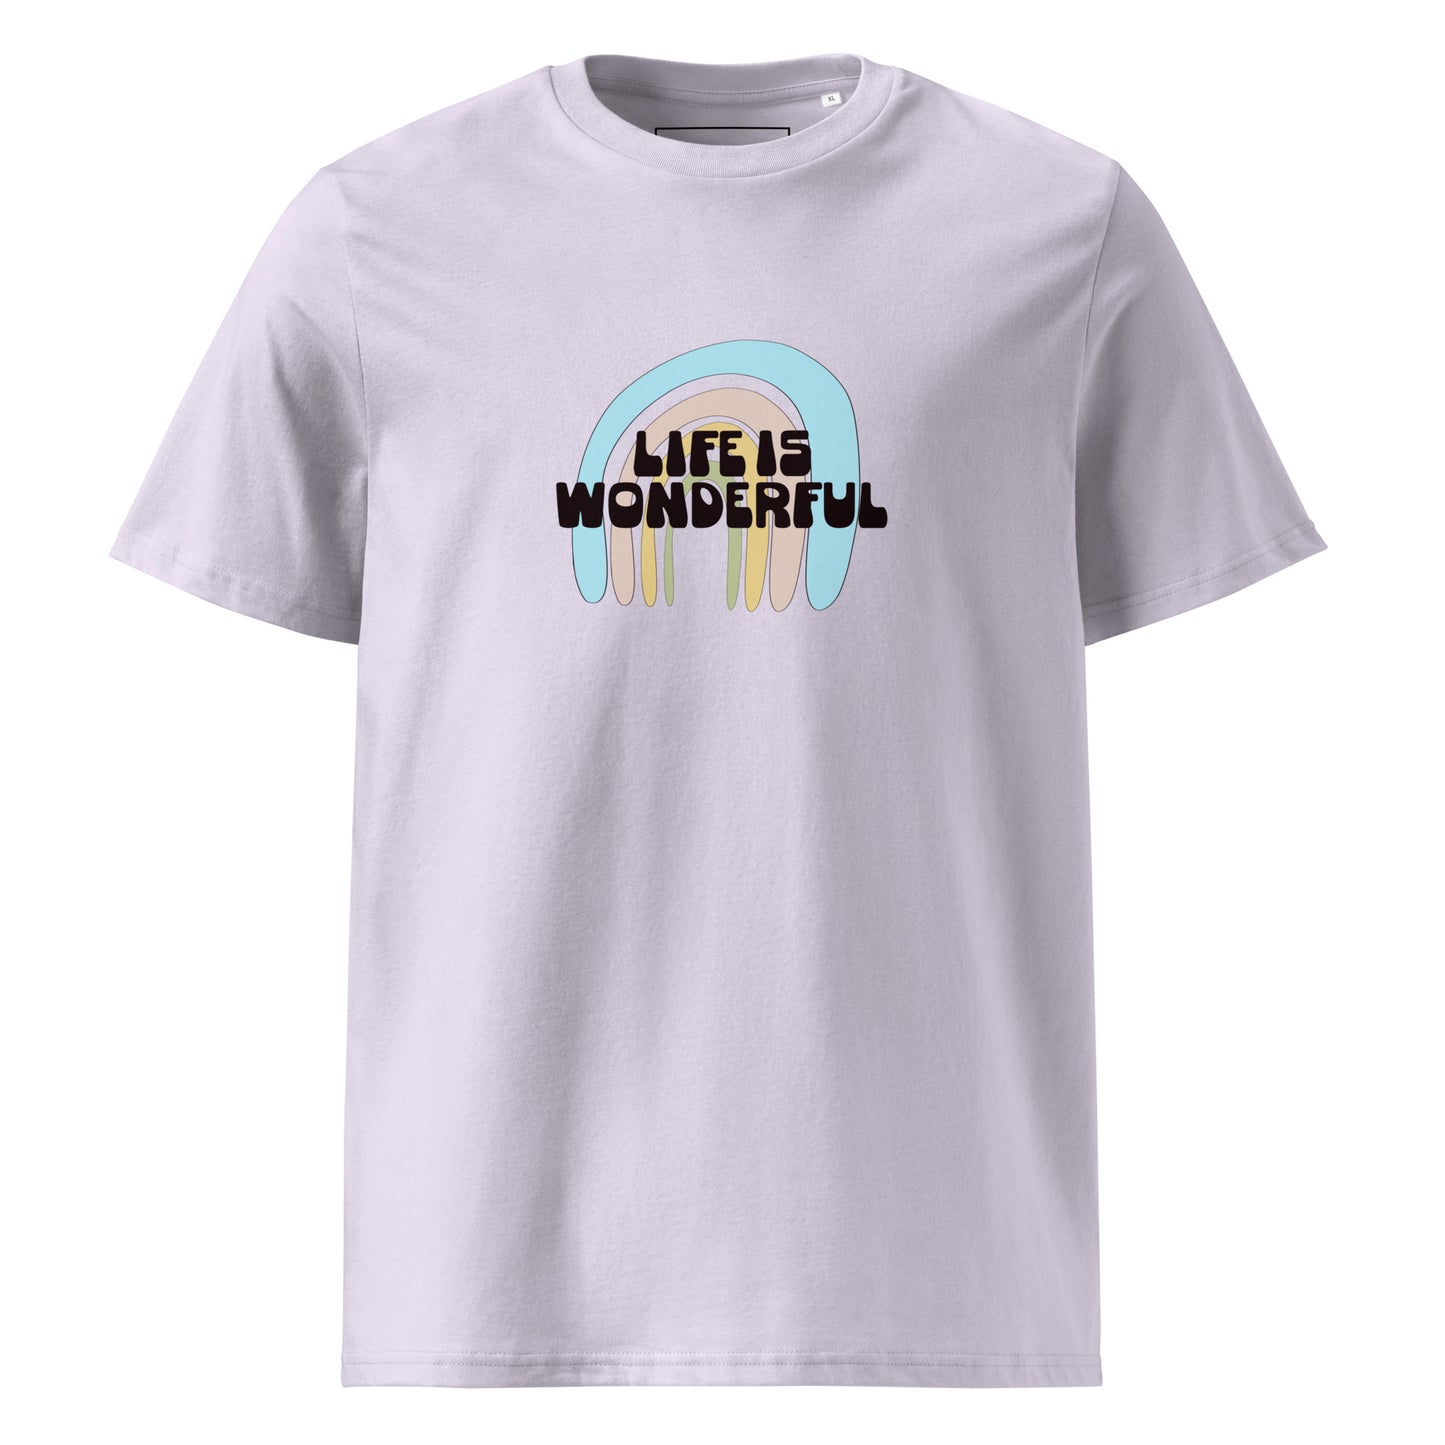 Life is wonderful - Unisex Organic Cotton T-shirt